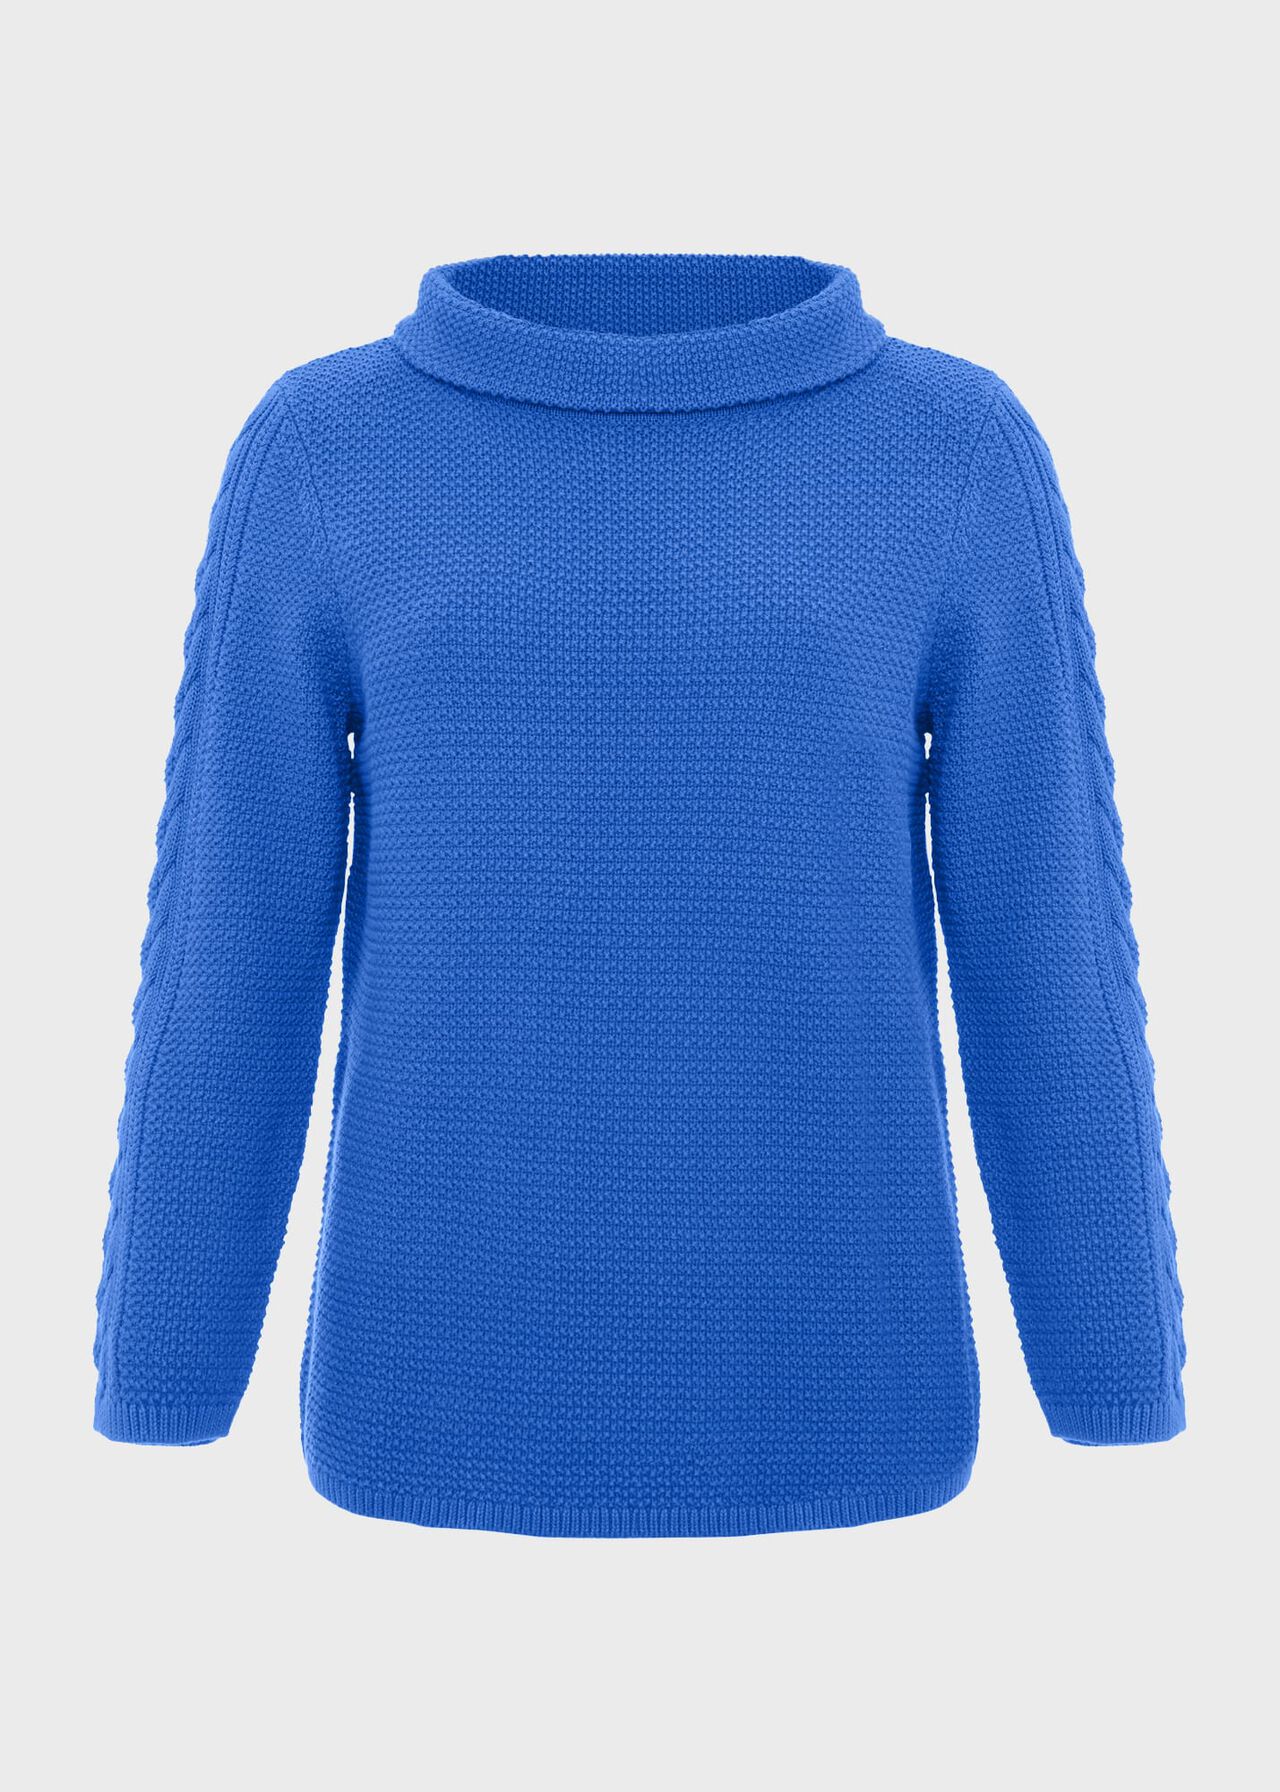 Camilla Cotton Sweater, Fjord Blue, hi-res